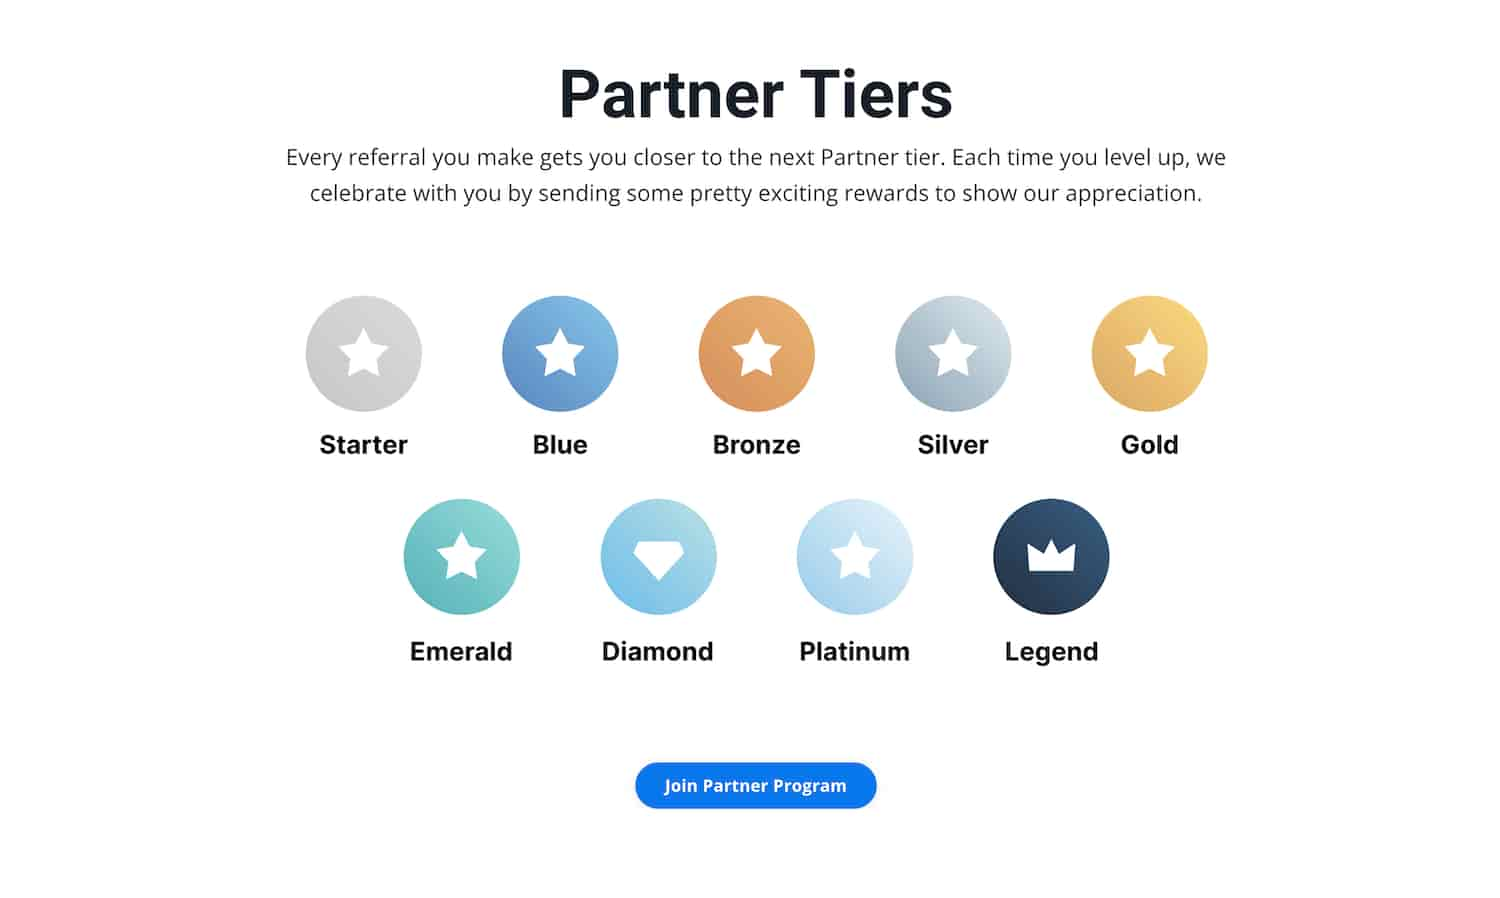 Kajabi partner tiers list including: Starter, Blue, Bronze, Silver, Gold, Emerald, Diamond, Legend